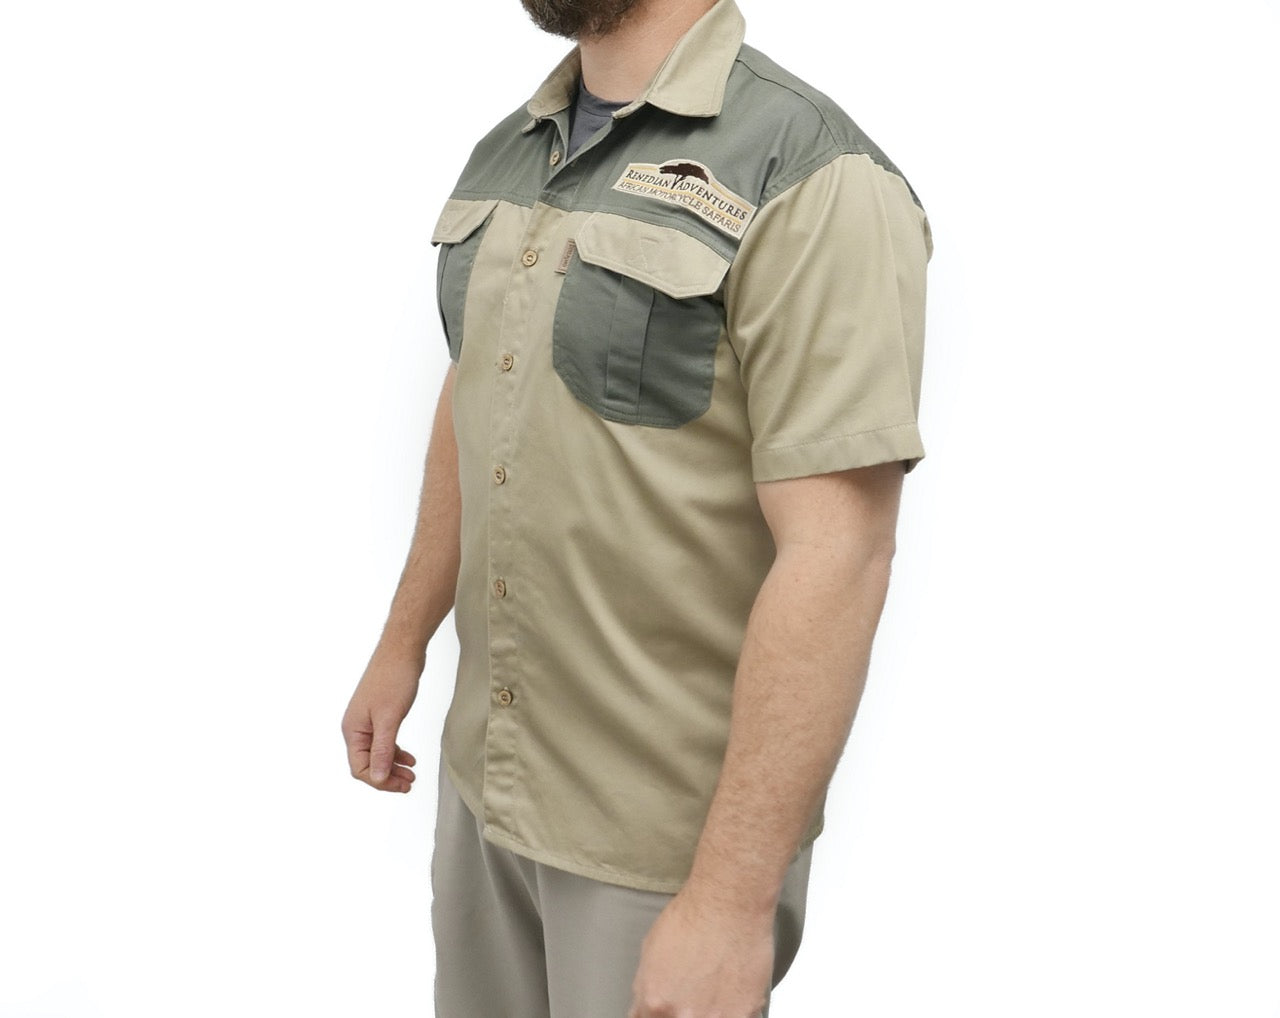 Dirt Road™ - Men’s Short Sleeve Shirt / Button with Renedian Logo (Beige/Olive)